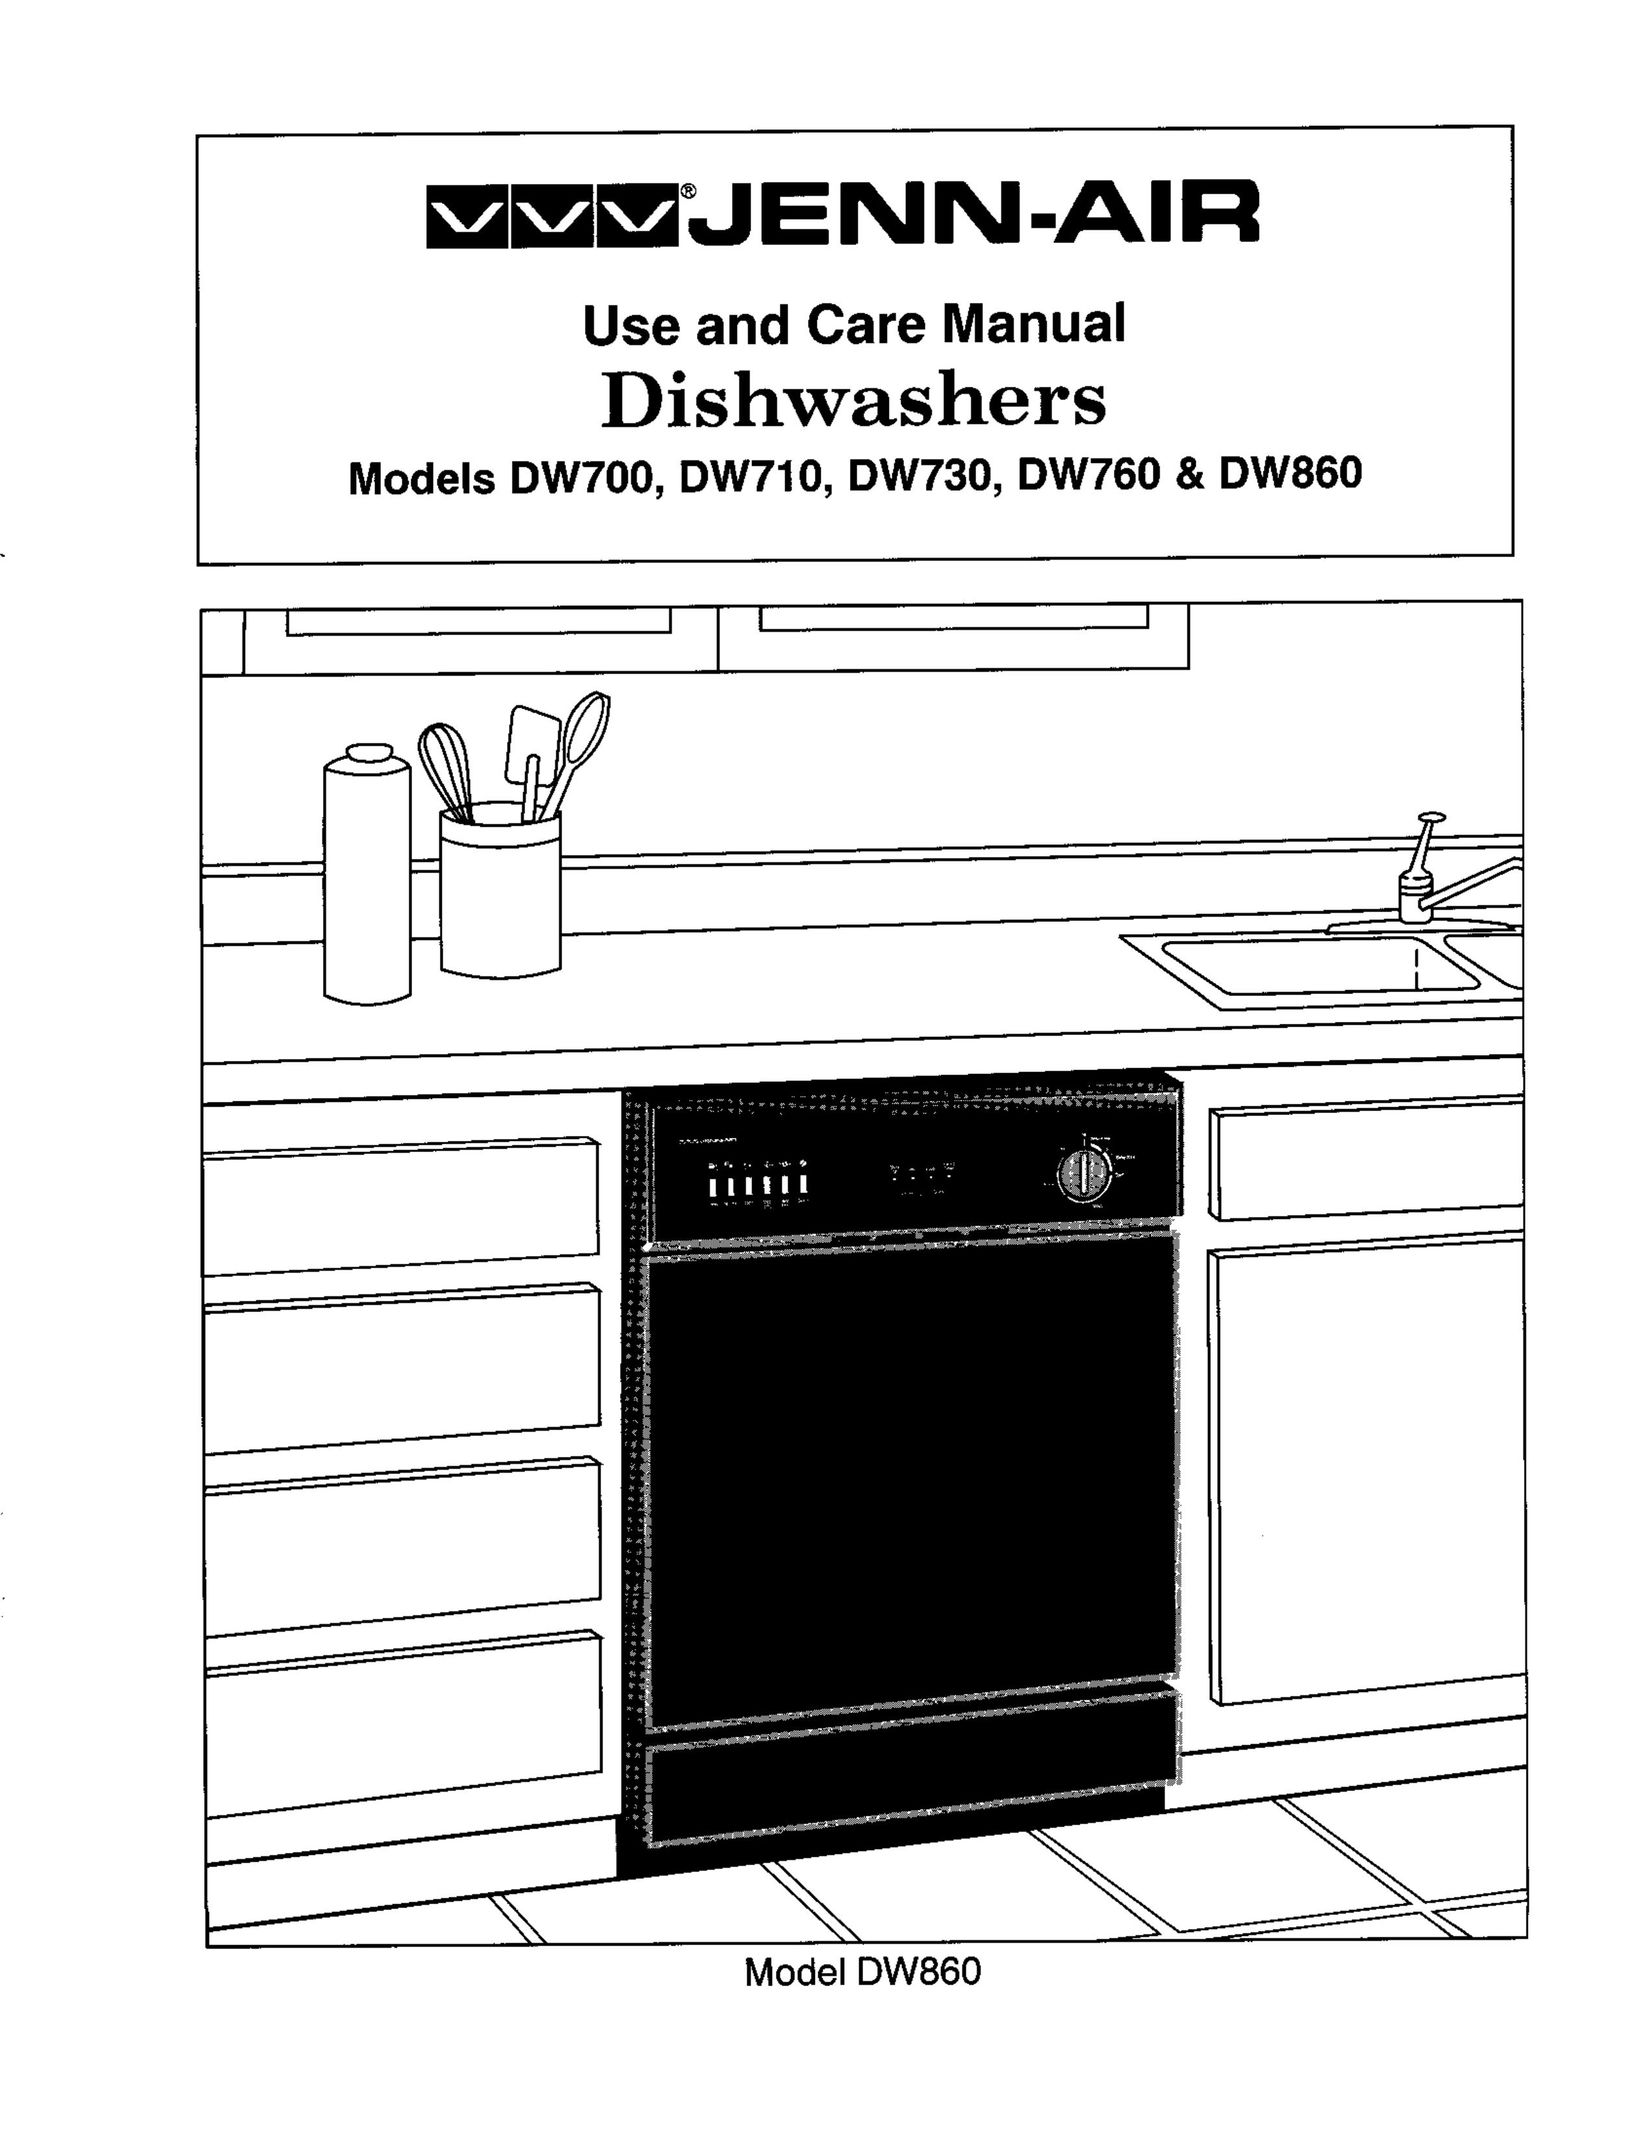 Jenn-Air DW730 Dishwasher User Manual